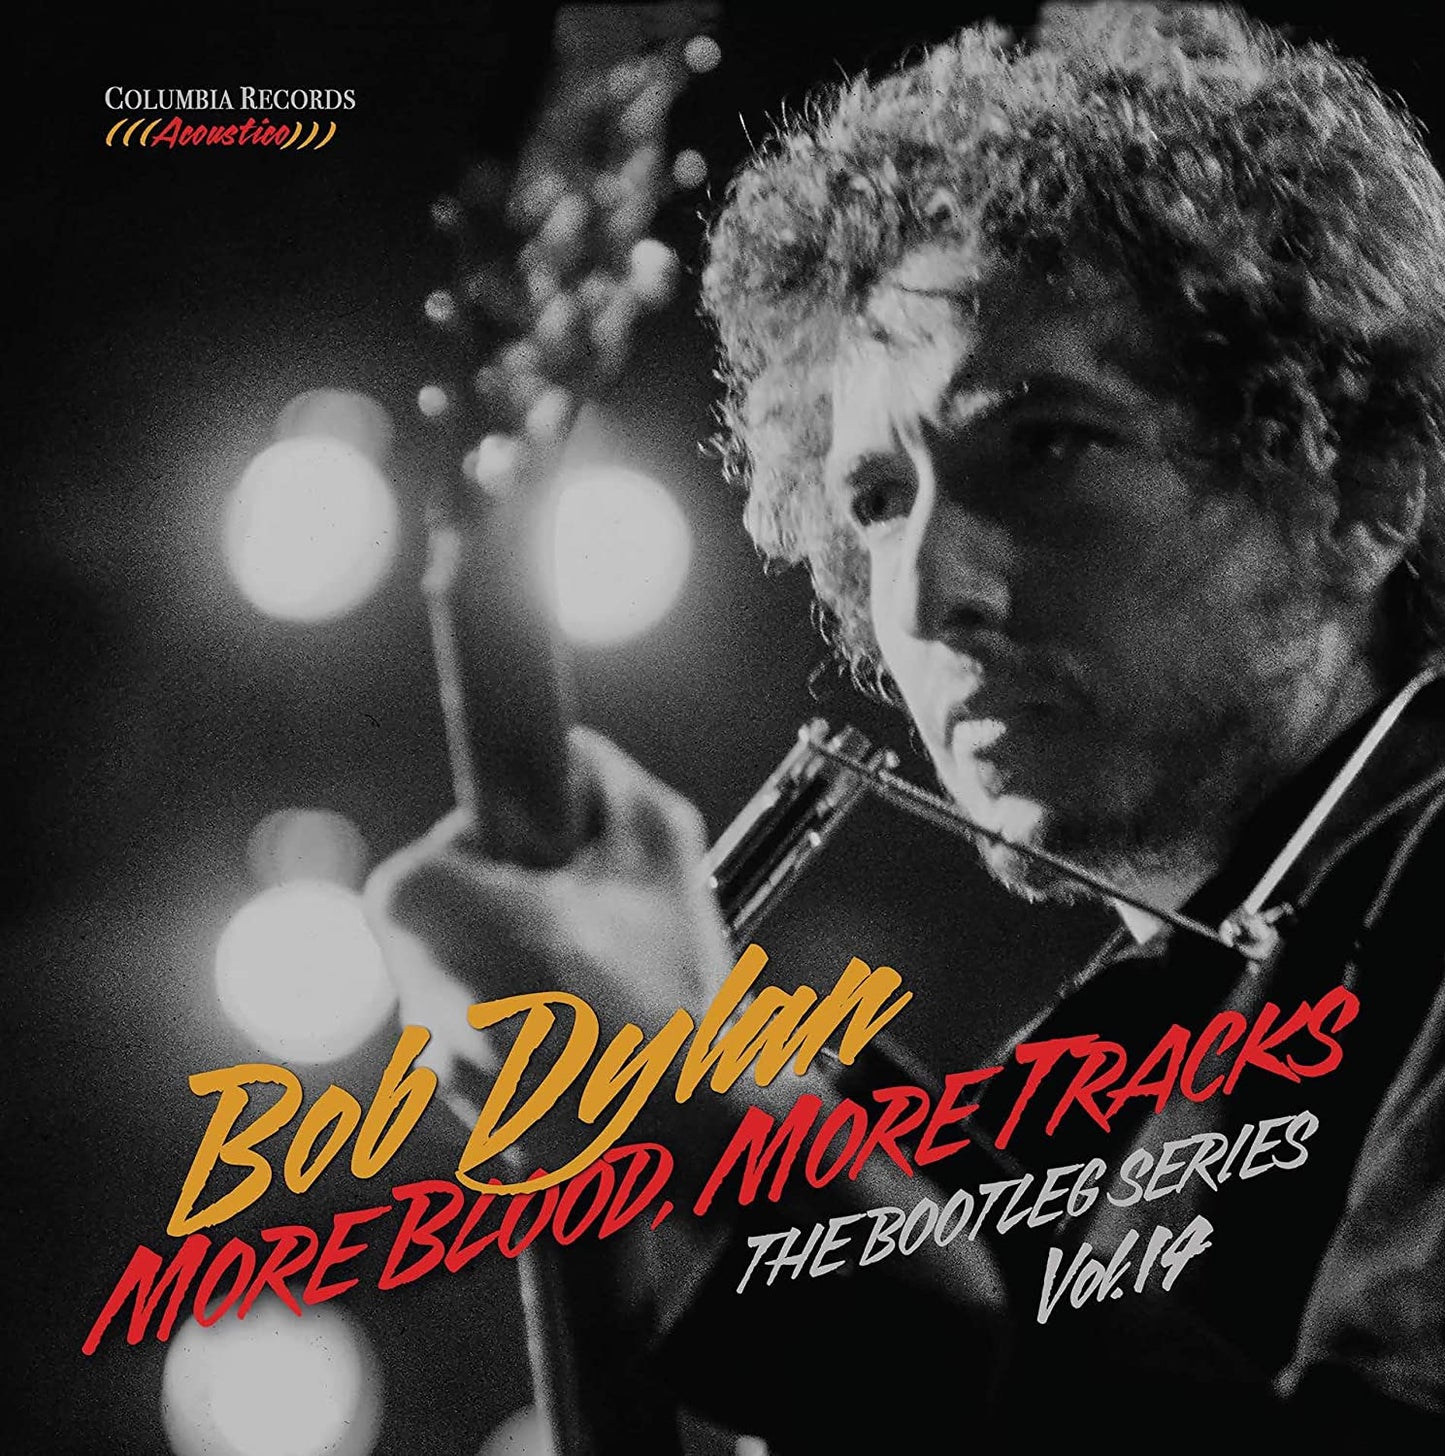 Dylan, Bob/More Blood, More Tracks - Bootleg Series Vol. 14 [CD]